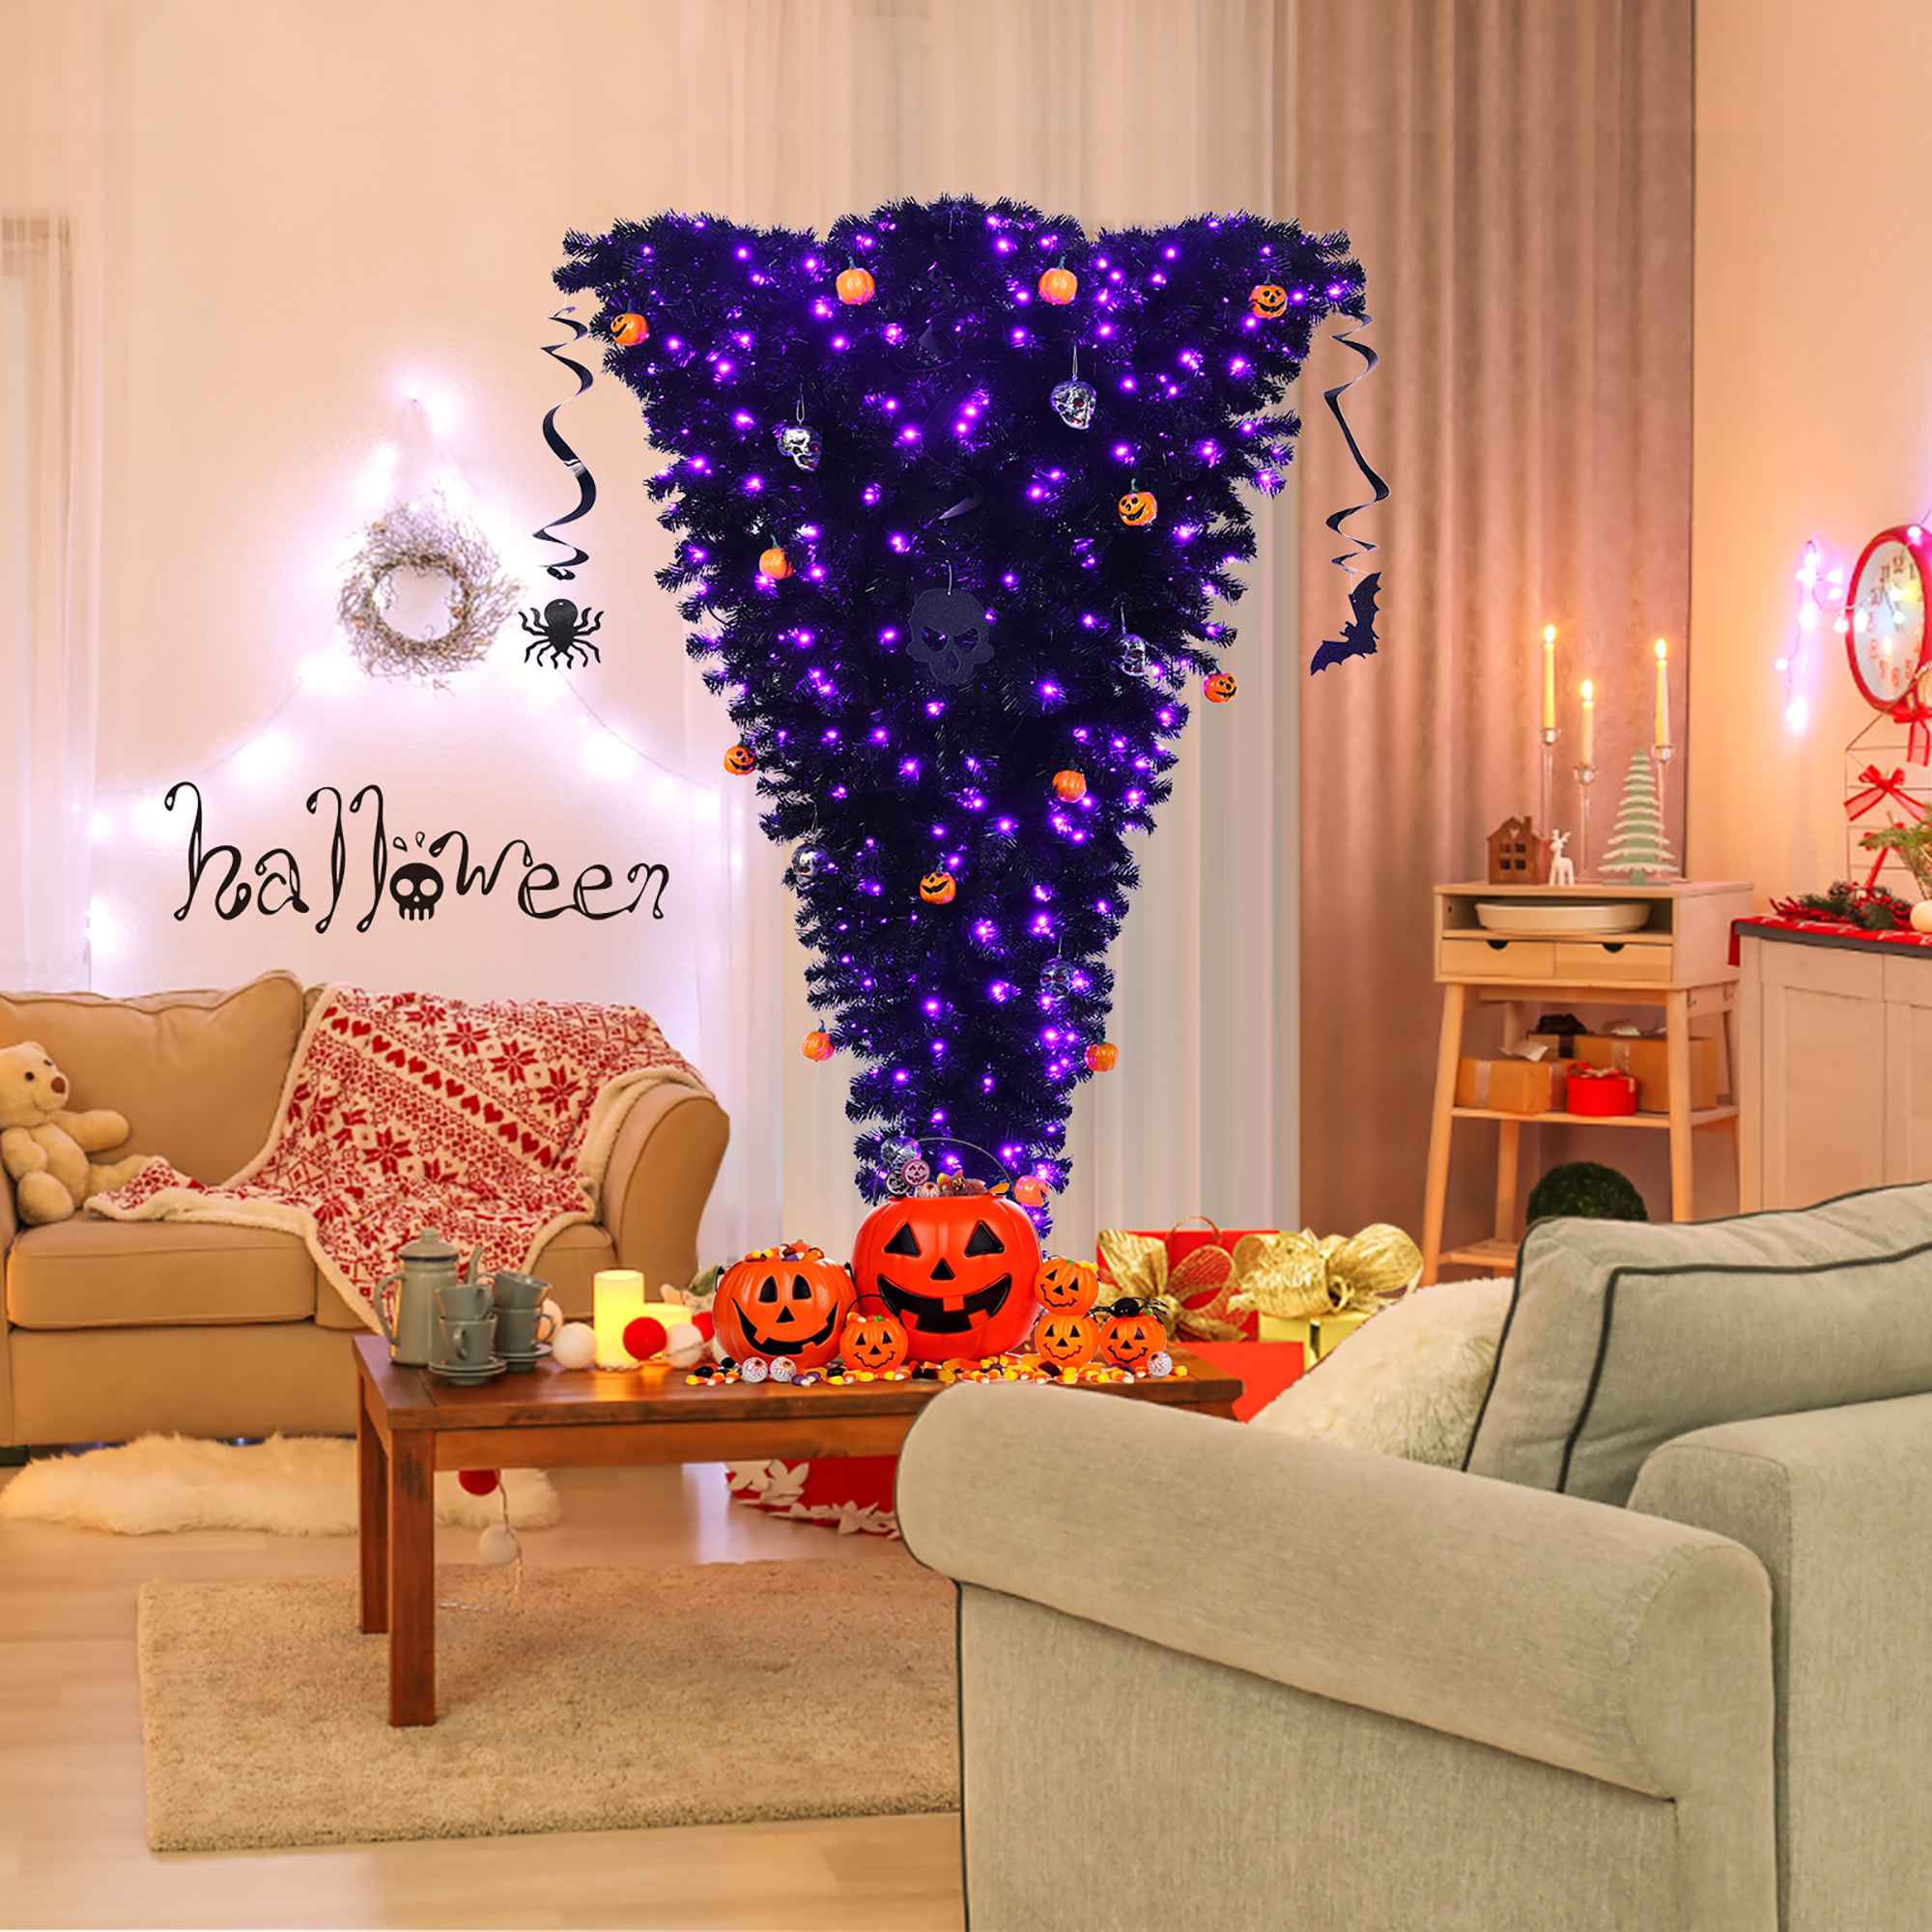 Costway 6ft Upside Down Christmas Halloween Tree Black w/270 Purple LED Lights